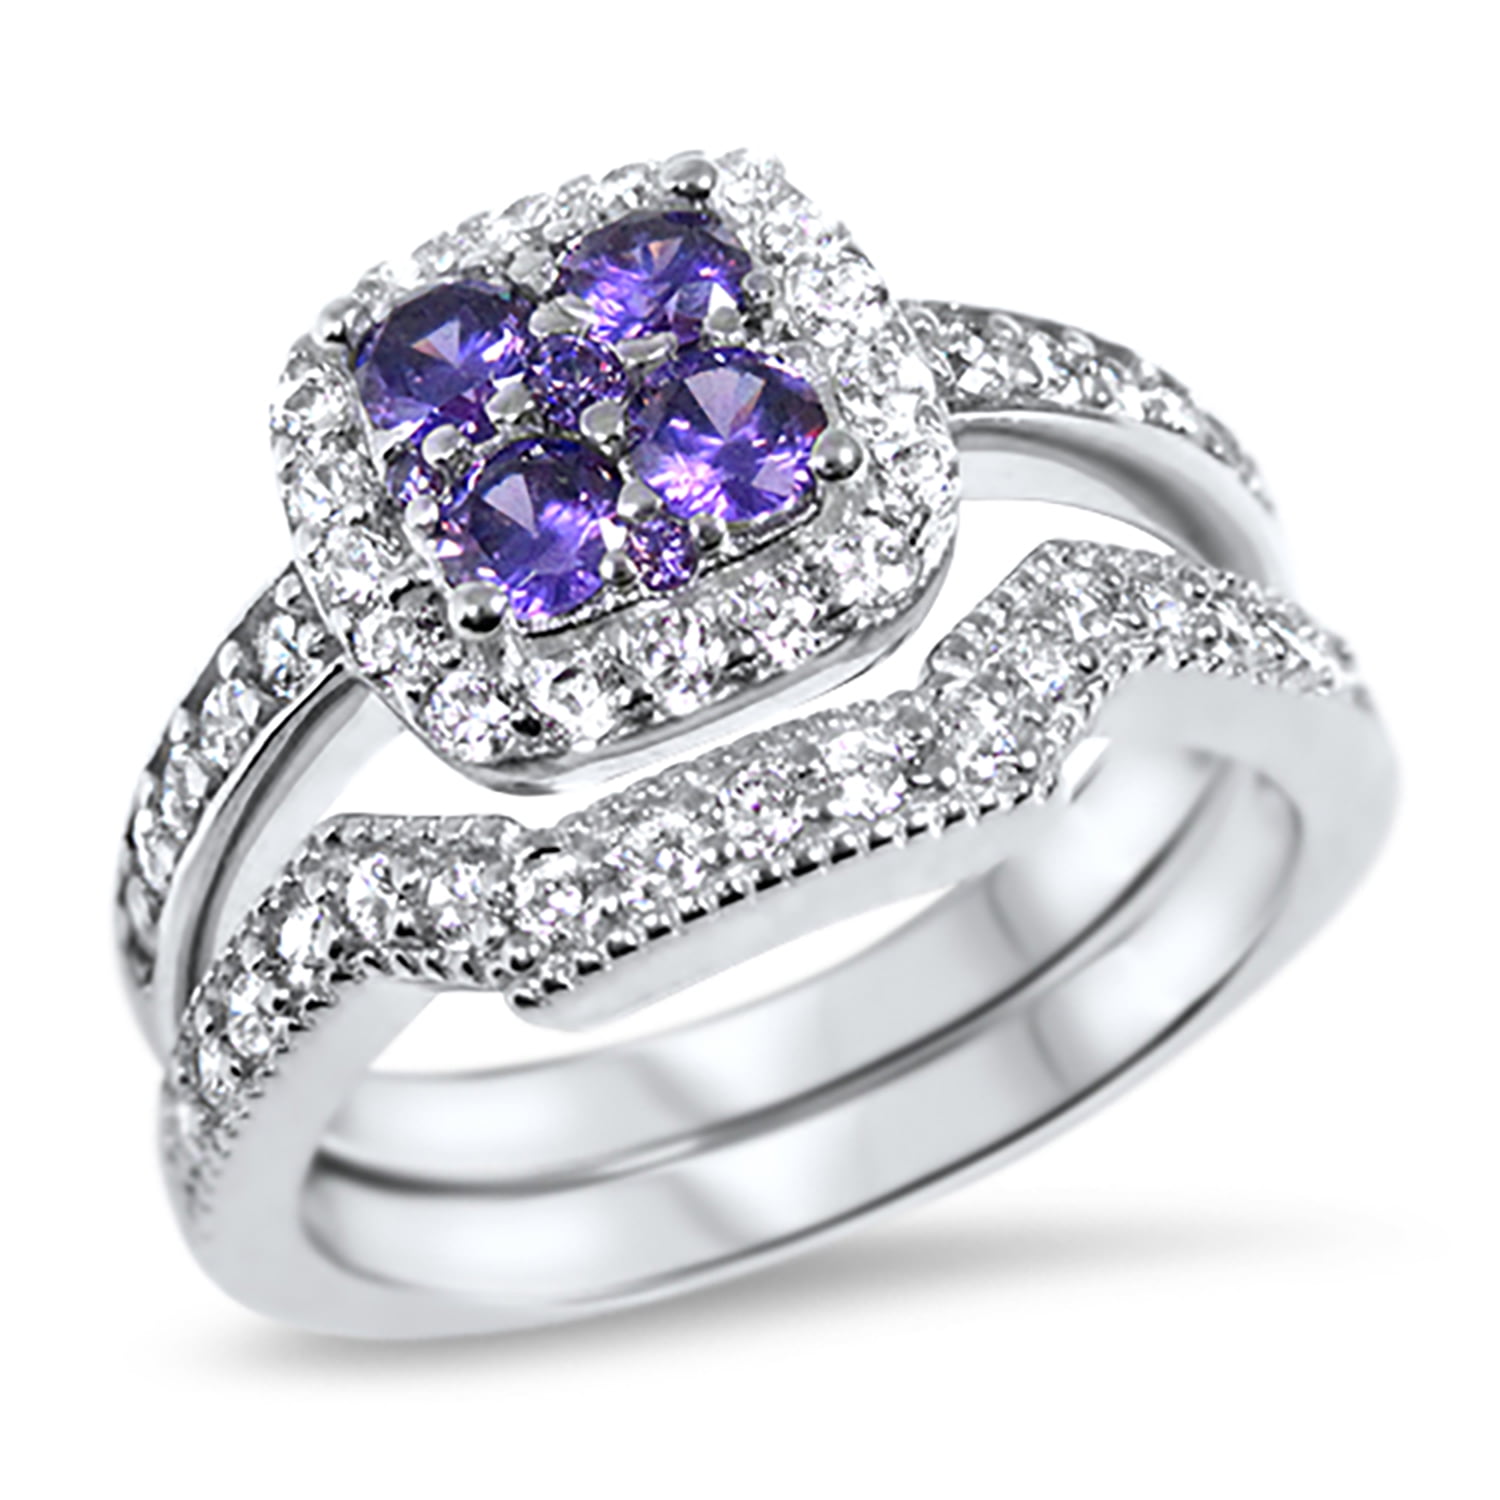 Brilliant Cut Lavender Engagement Wedding CZ Sterling Silver Ring Set 